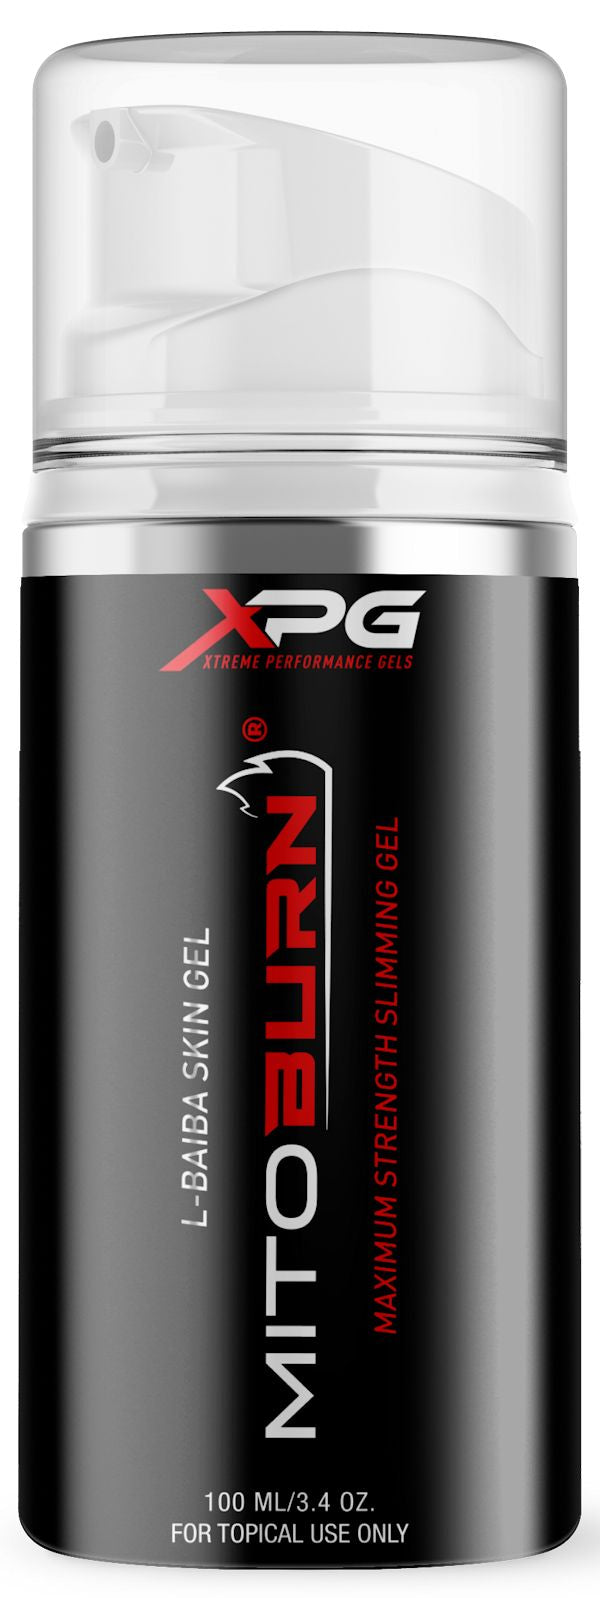 Xtreme Performance Gels XPG MitoBurn Gel Maximum